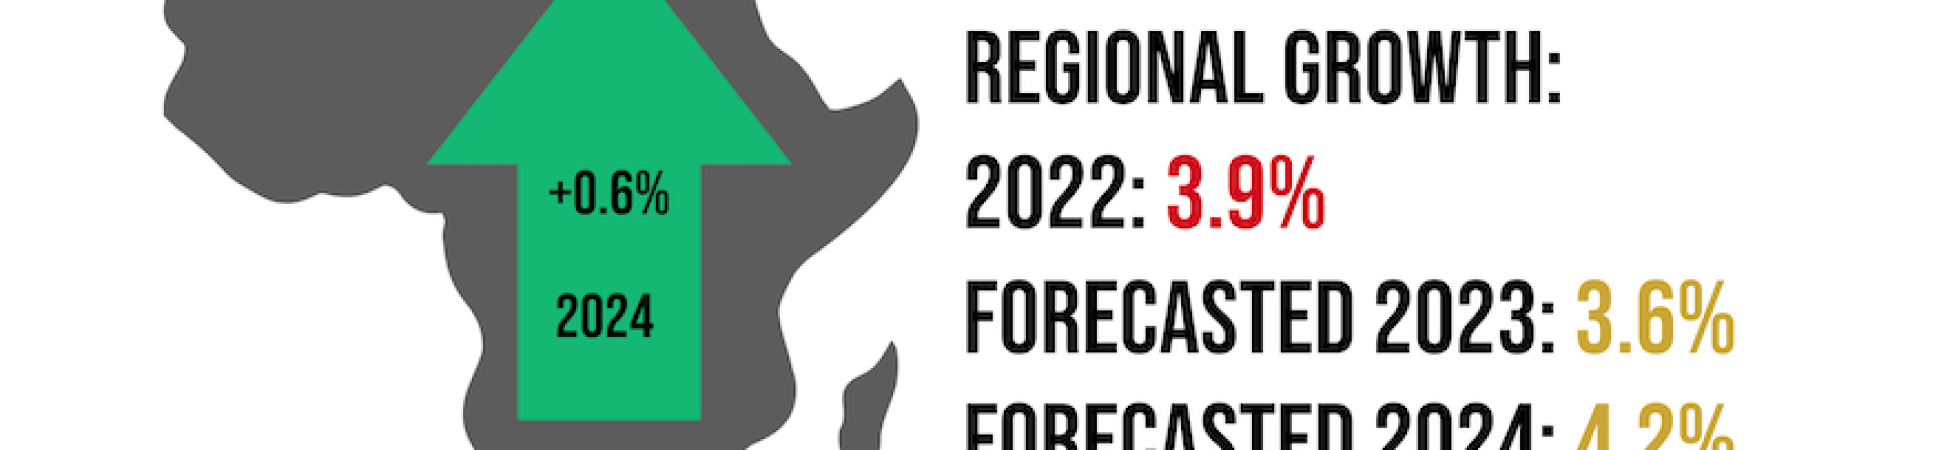 Africa's regional growth forecast